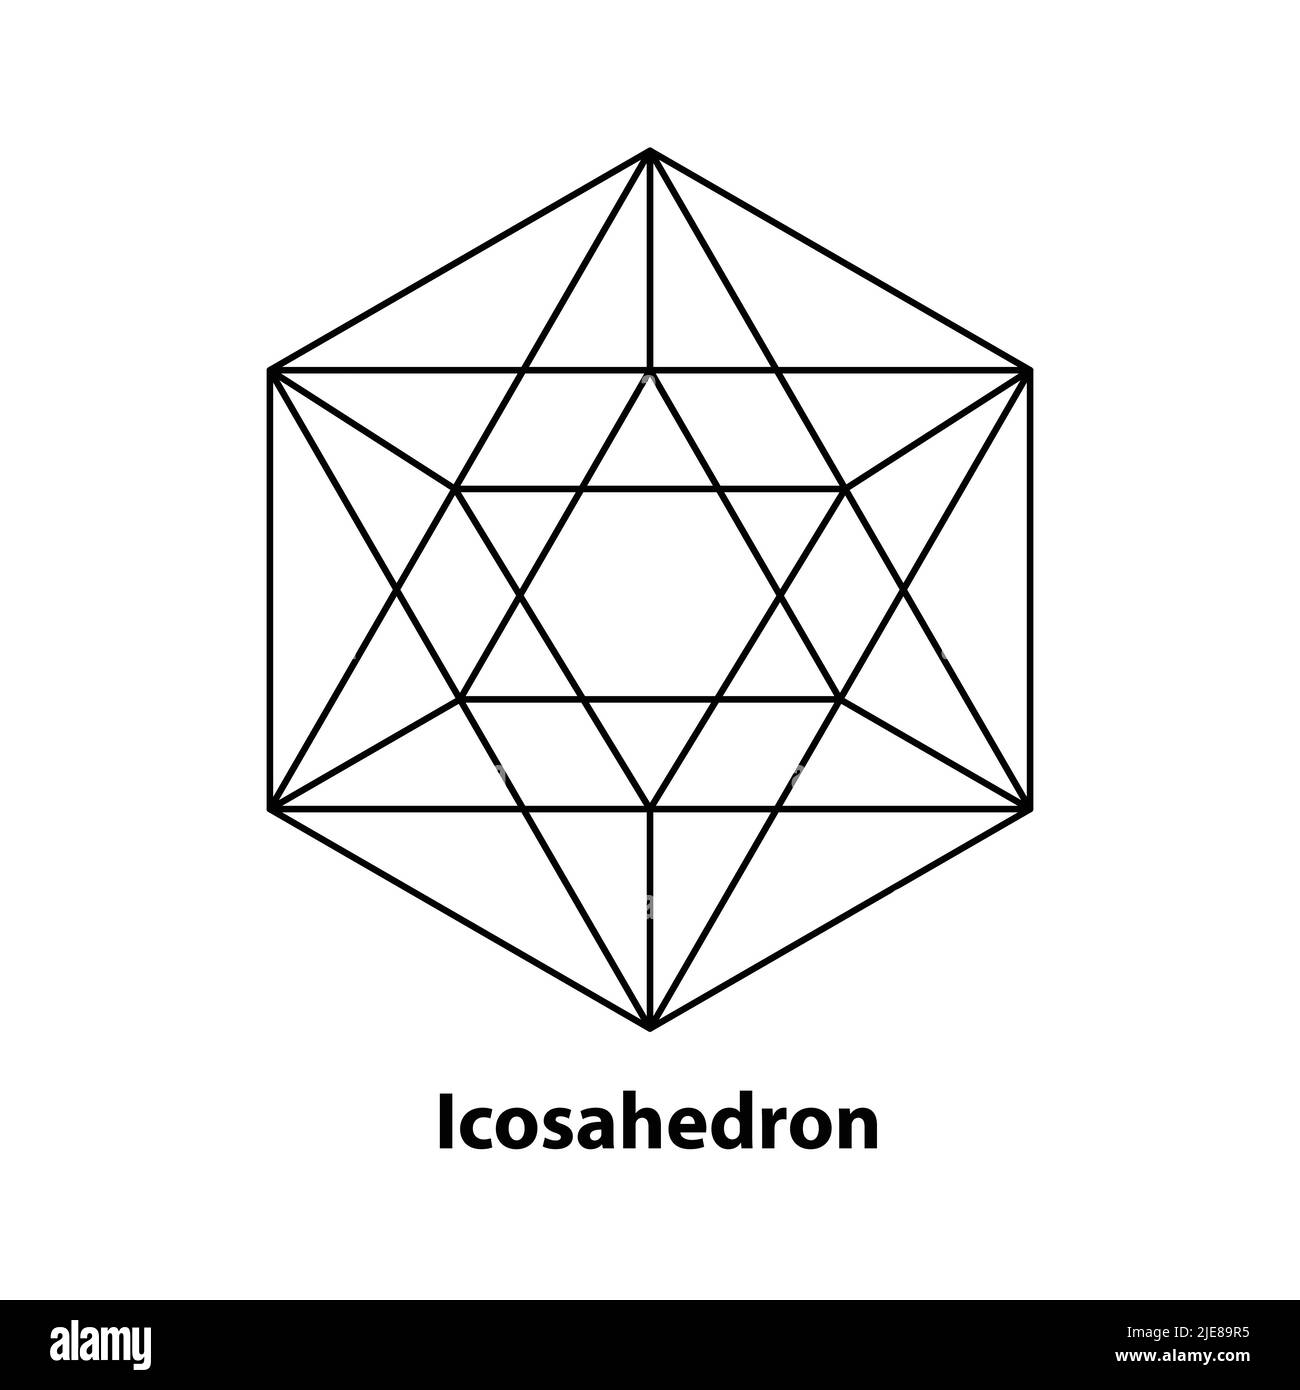 Icosahedron line drawing, sacred geometry, platonic solid, logo design, vector illustration Stock Vector